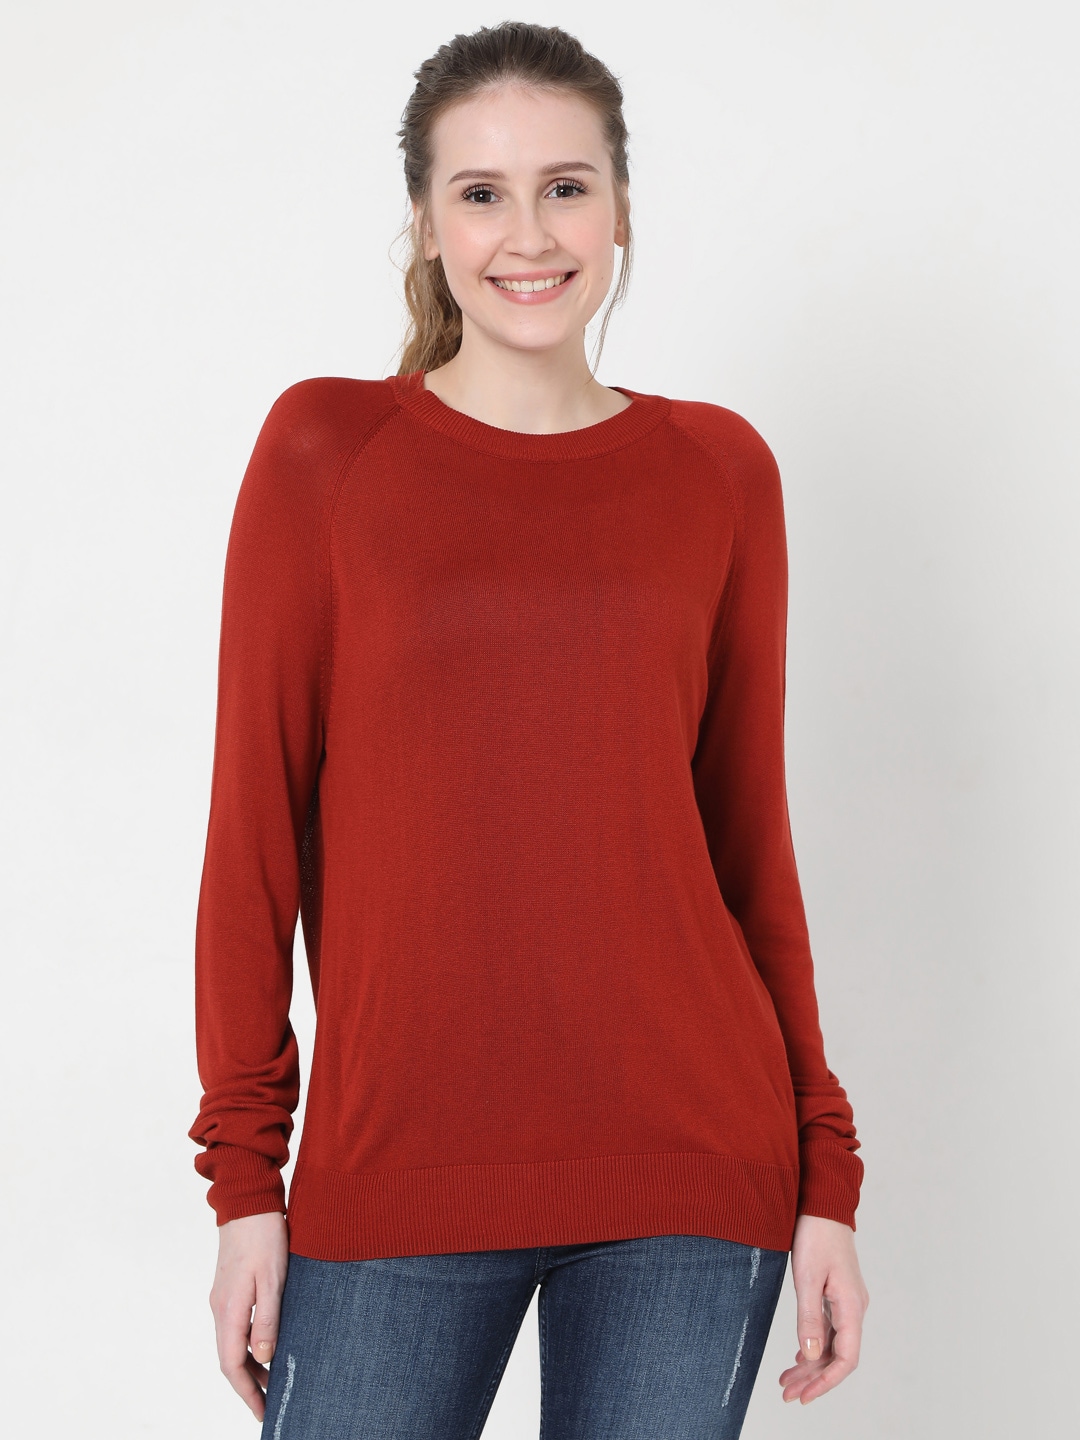 Vero Moda Women's Rust Solid Full Sleeved Sweater Price in India